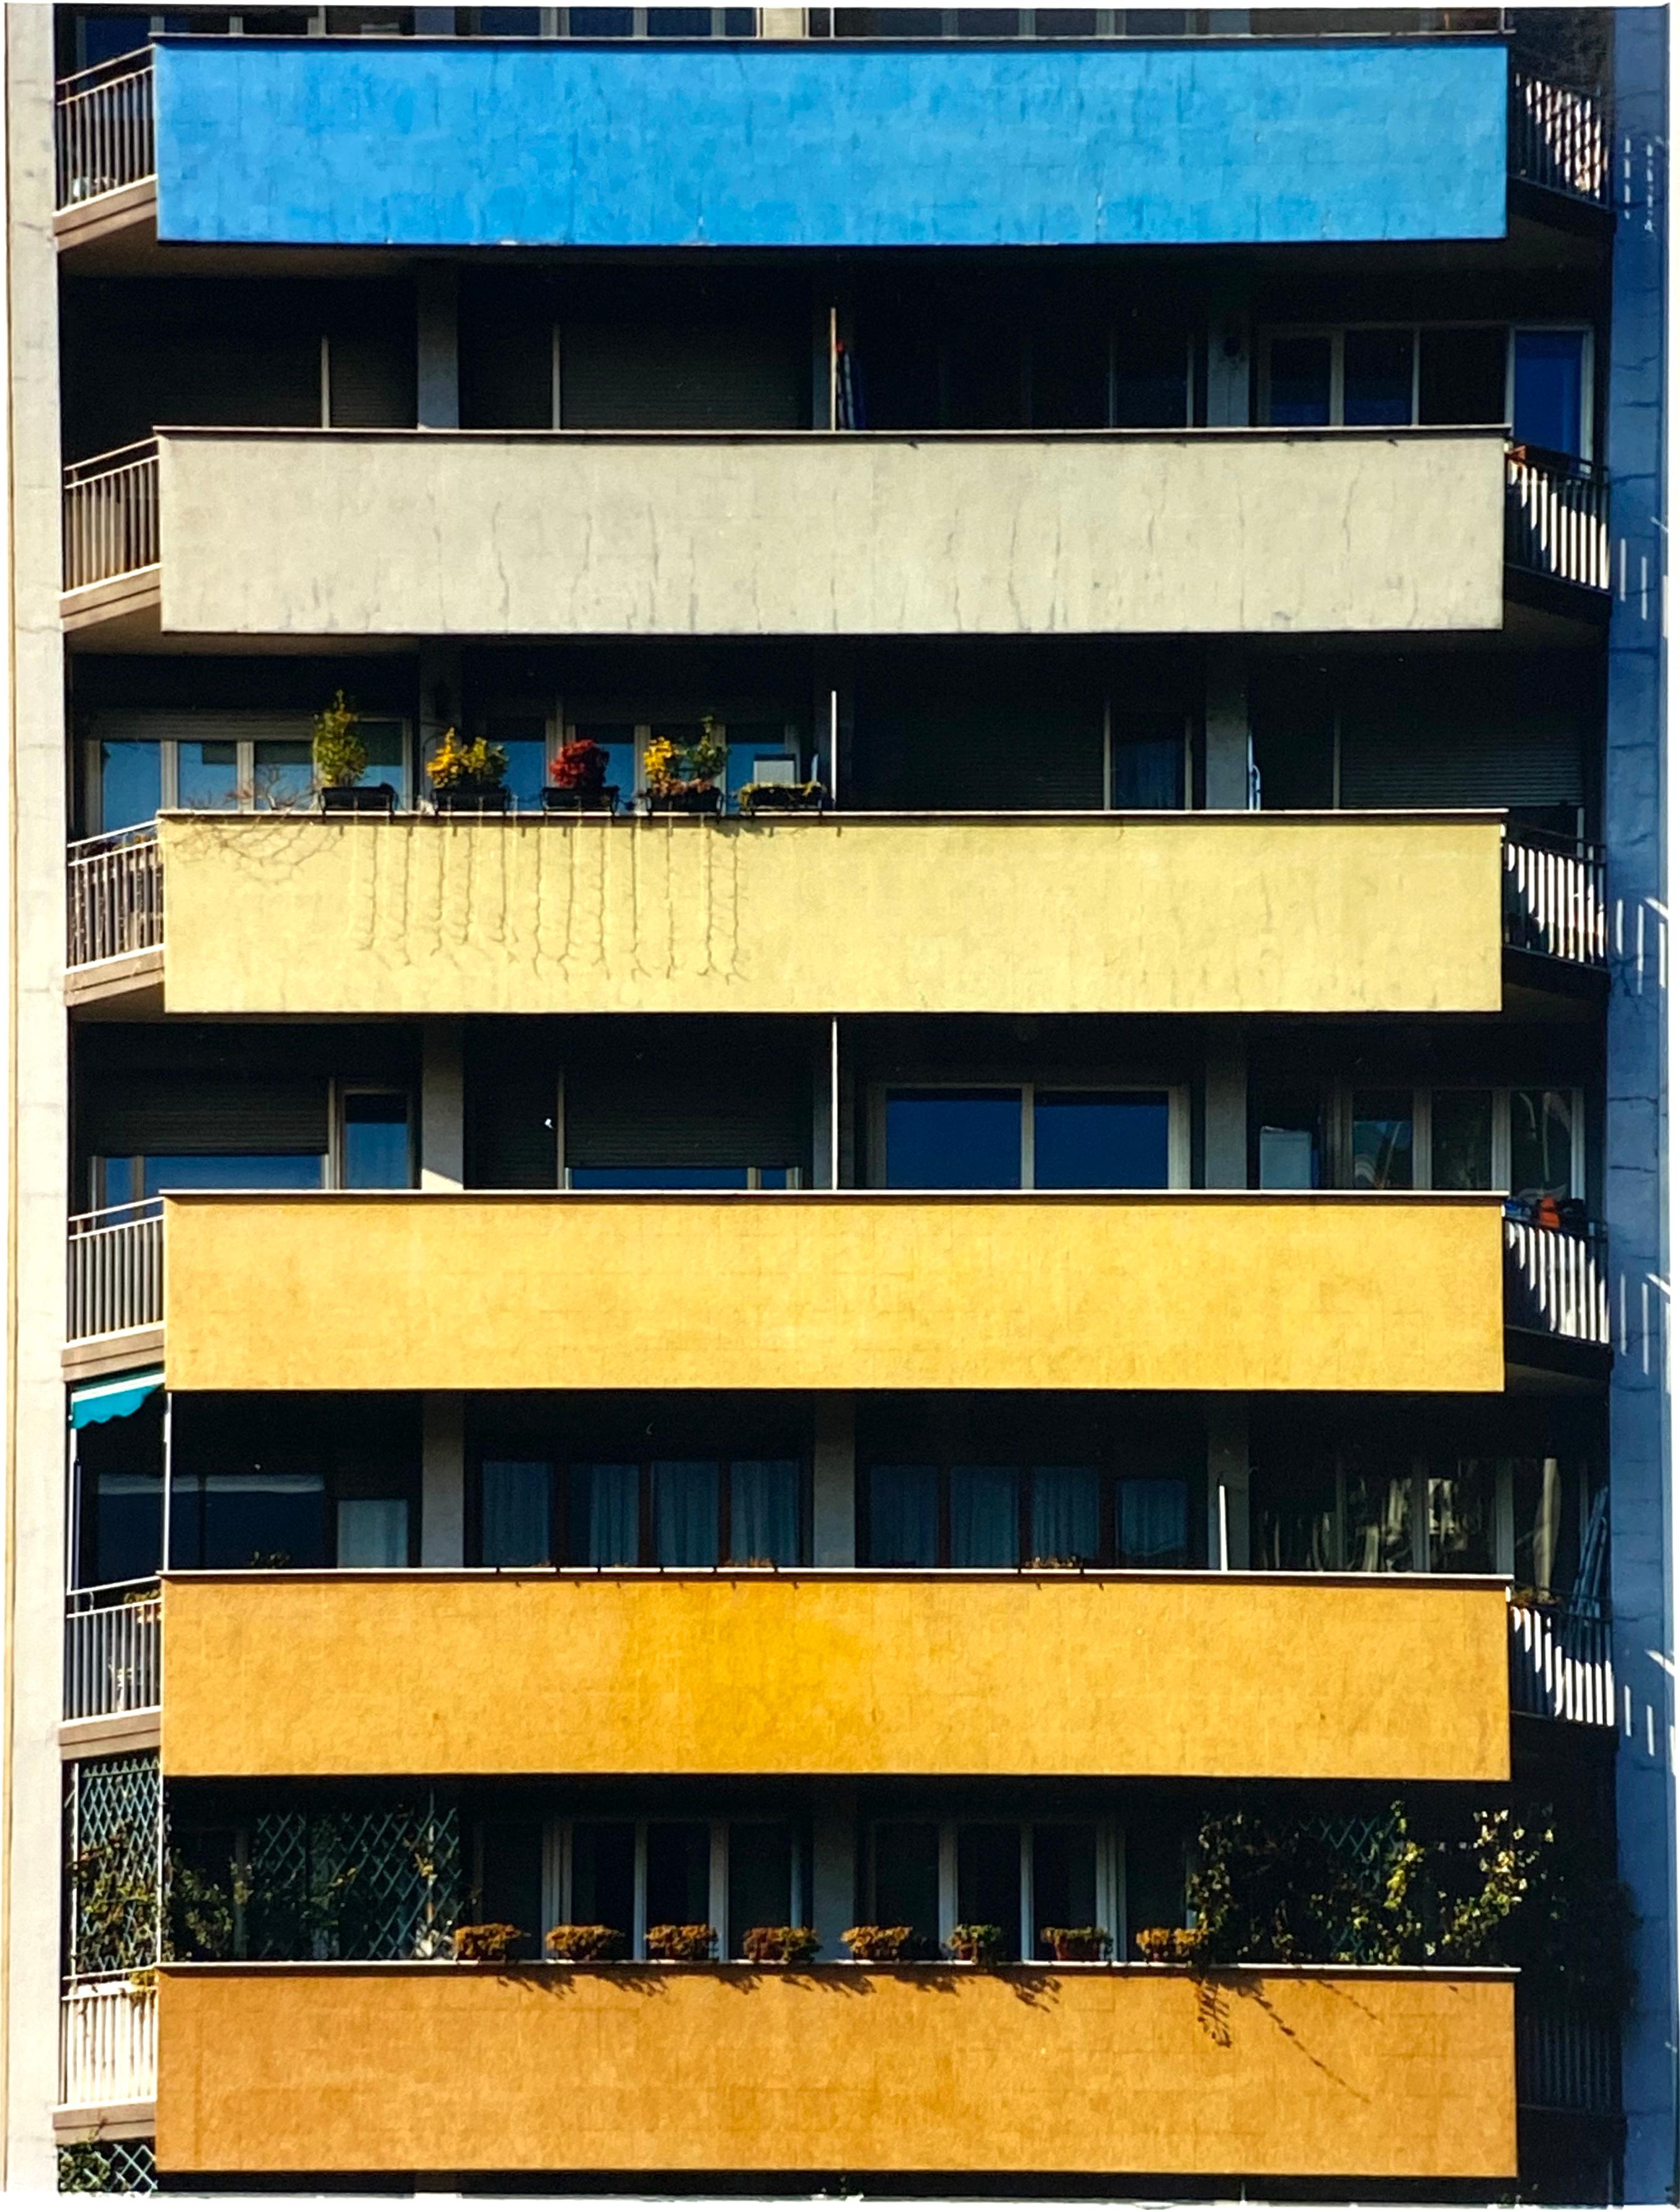 Richard Heeps Color Photograph – Rainbow Apartments, Mailand - Konzeptionelle architektonische Farbfotografie